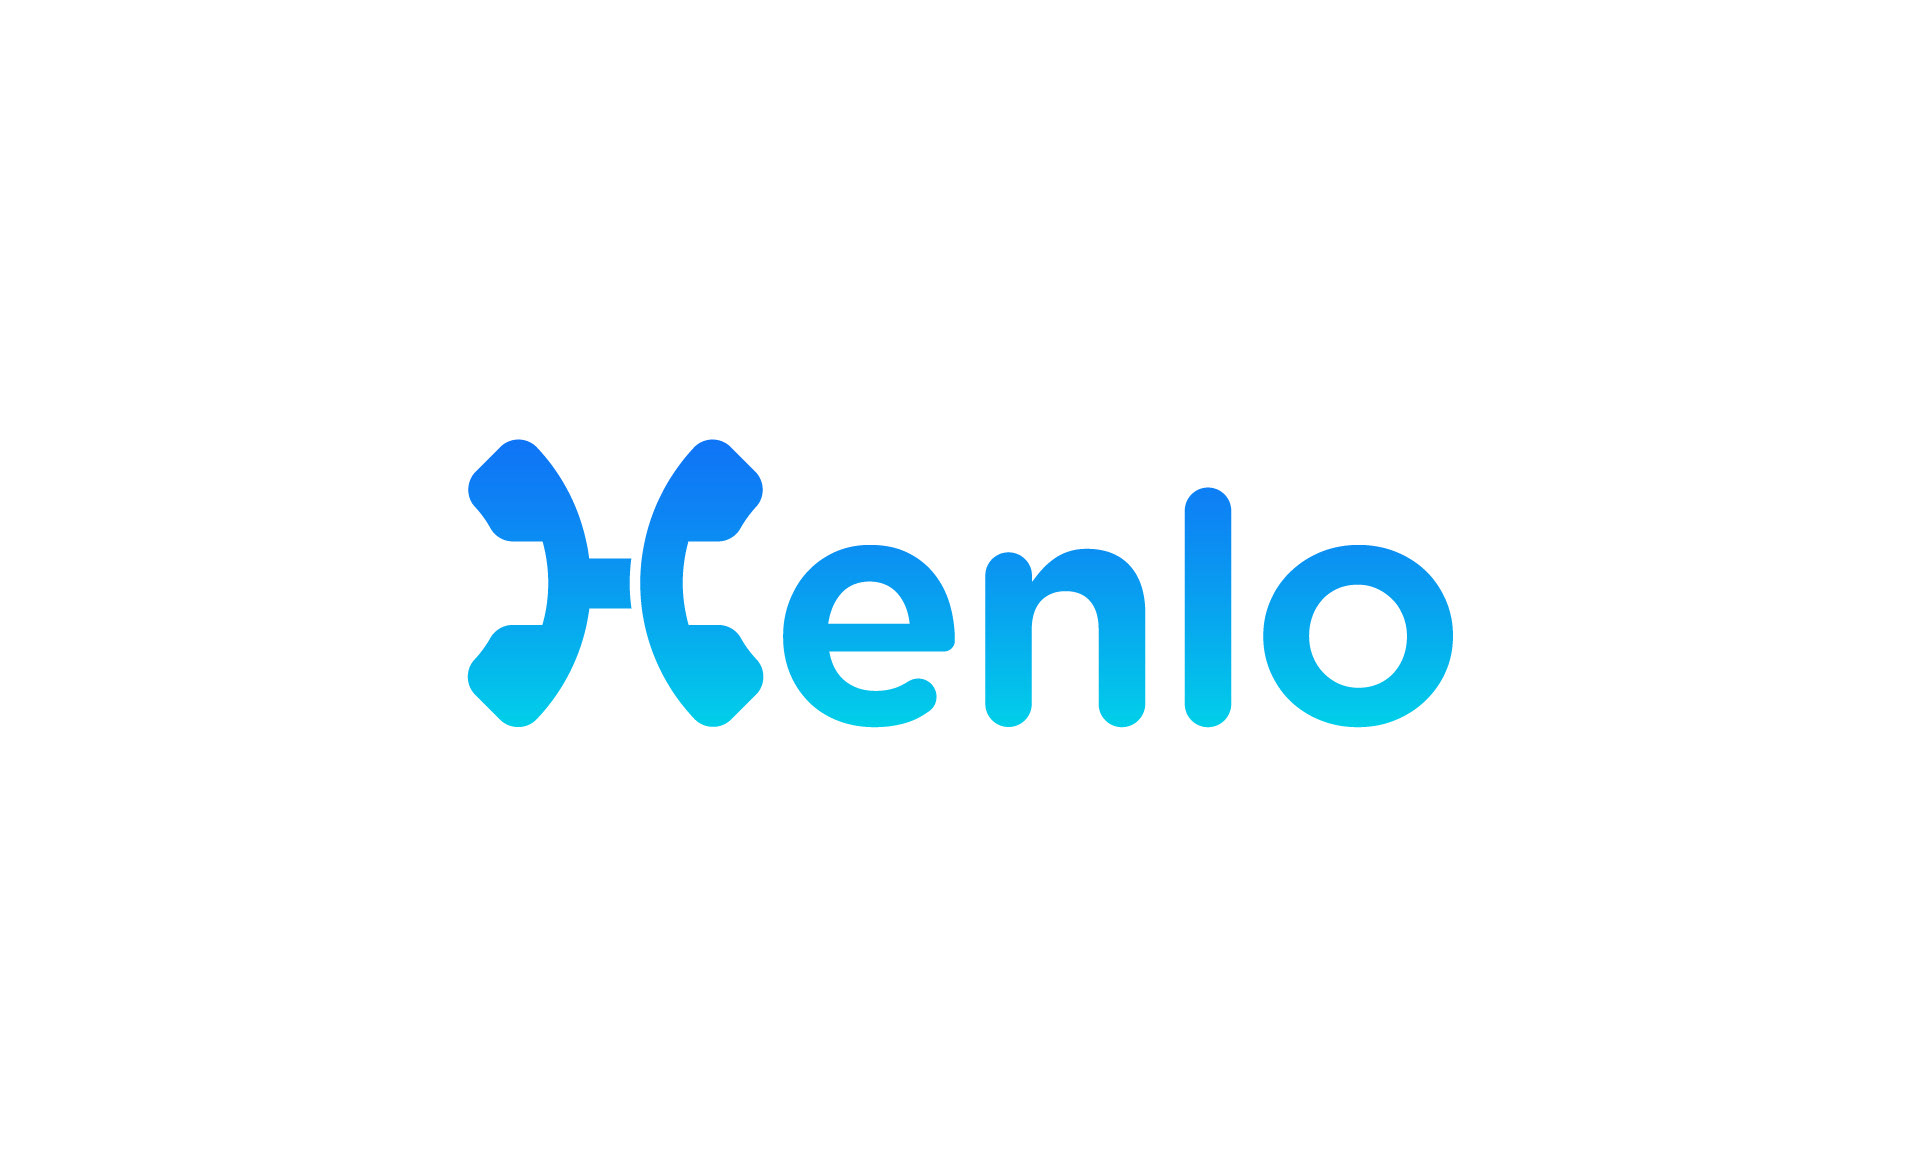 Logofolio 2020 - 2021 (Vol. 4) on Behance